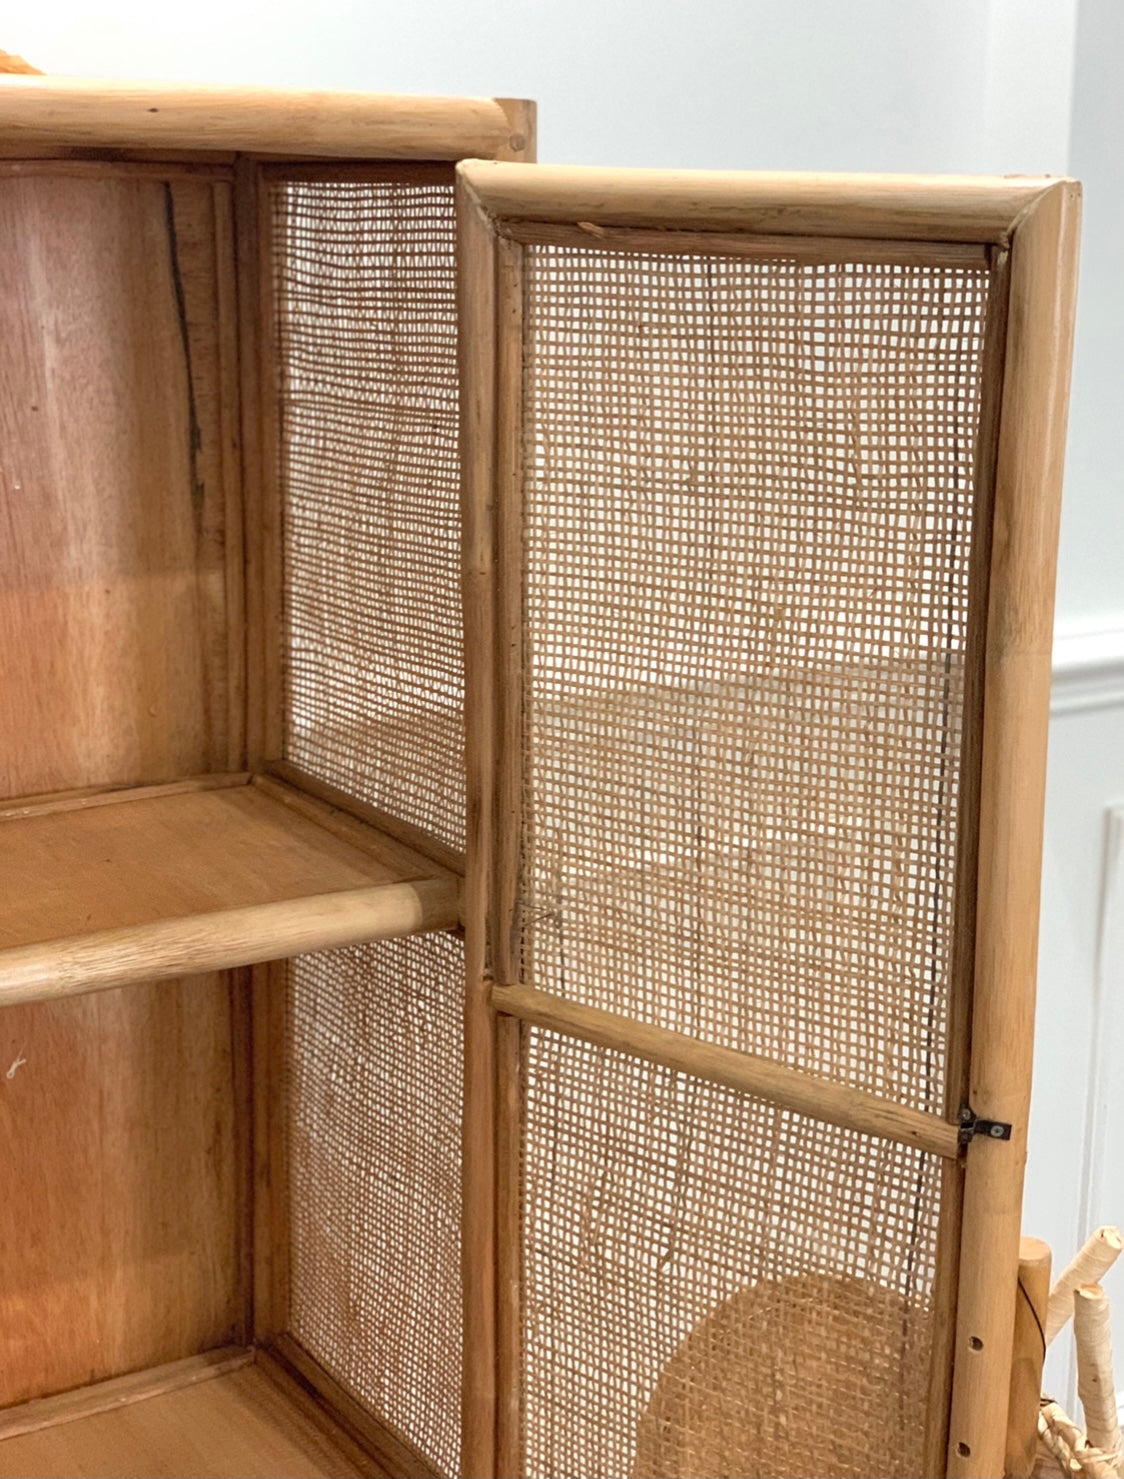 Boracay Shelf Cabinet